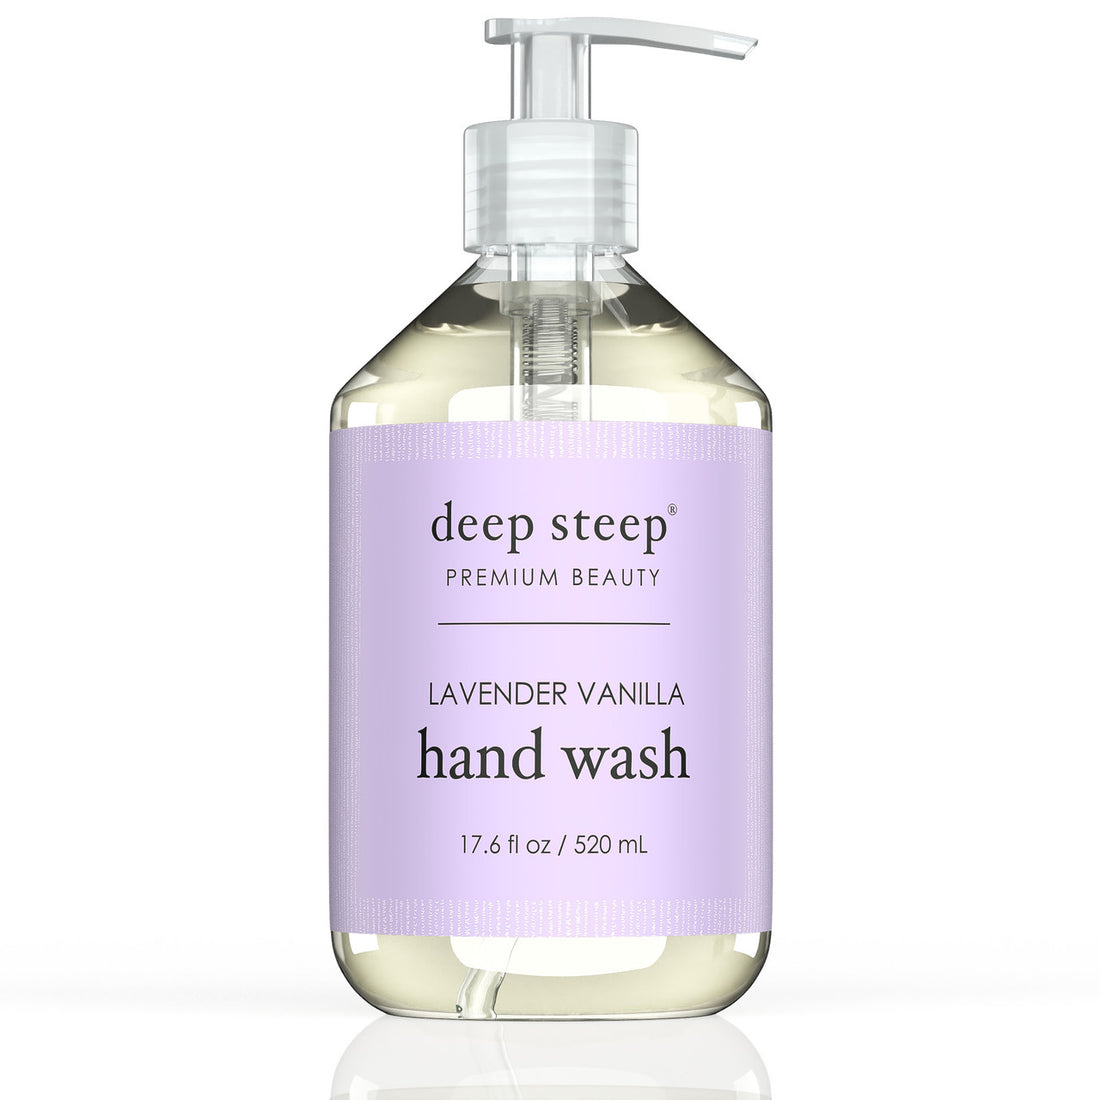 Argan Oil Hand Wash Lavender Vanilla 17.6oz - Front